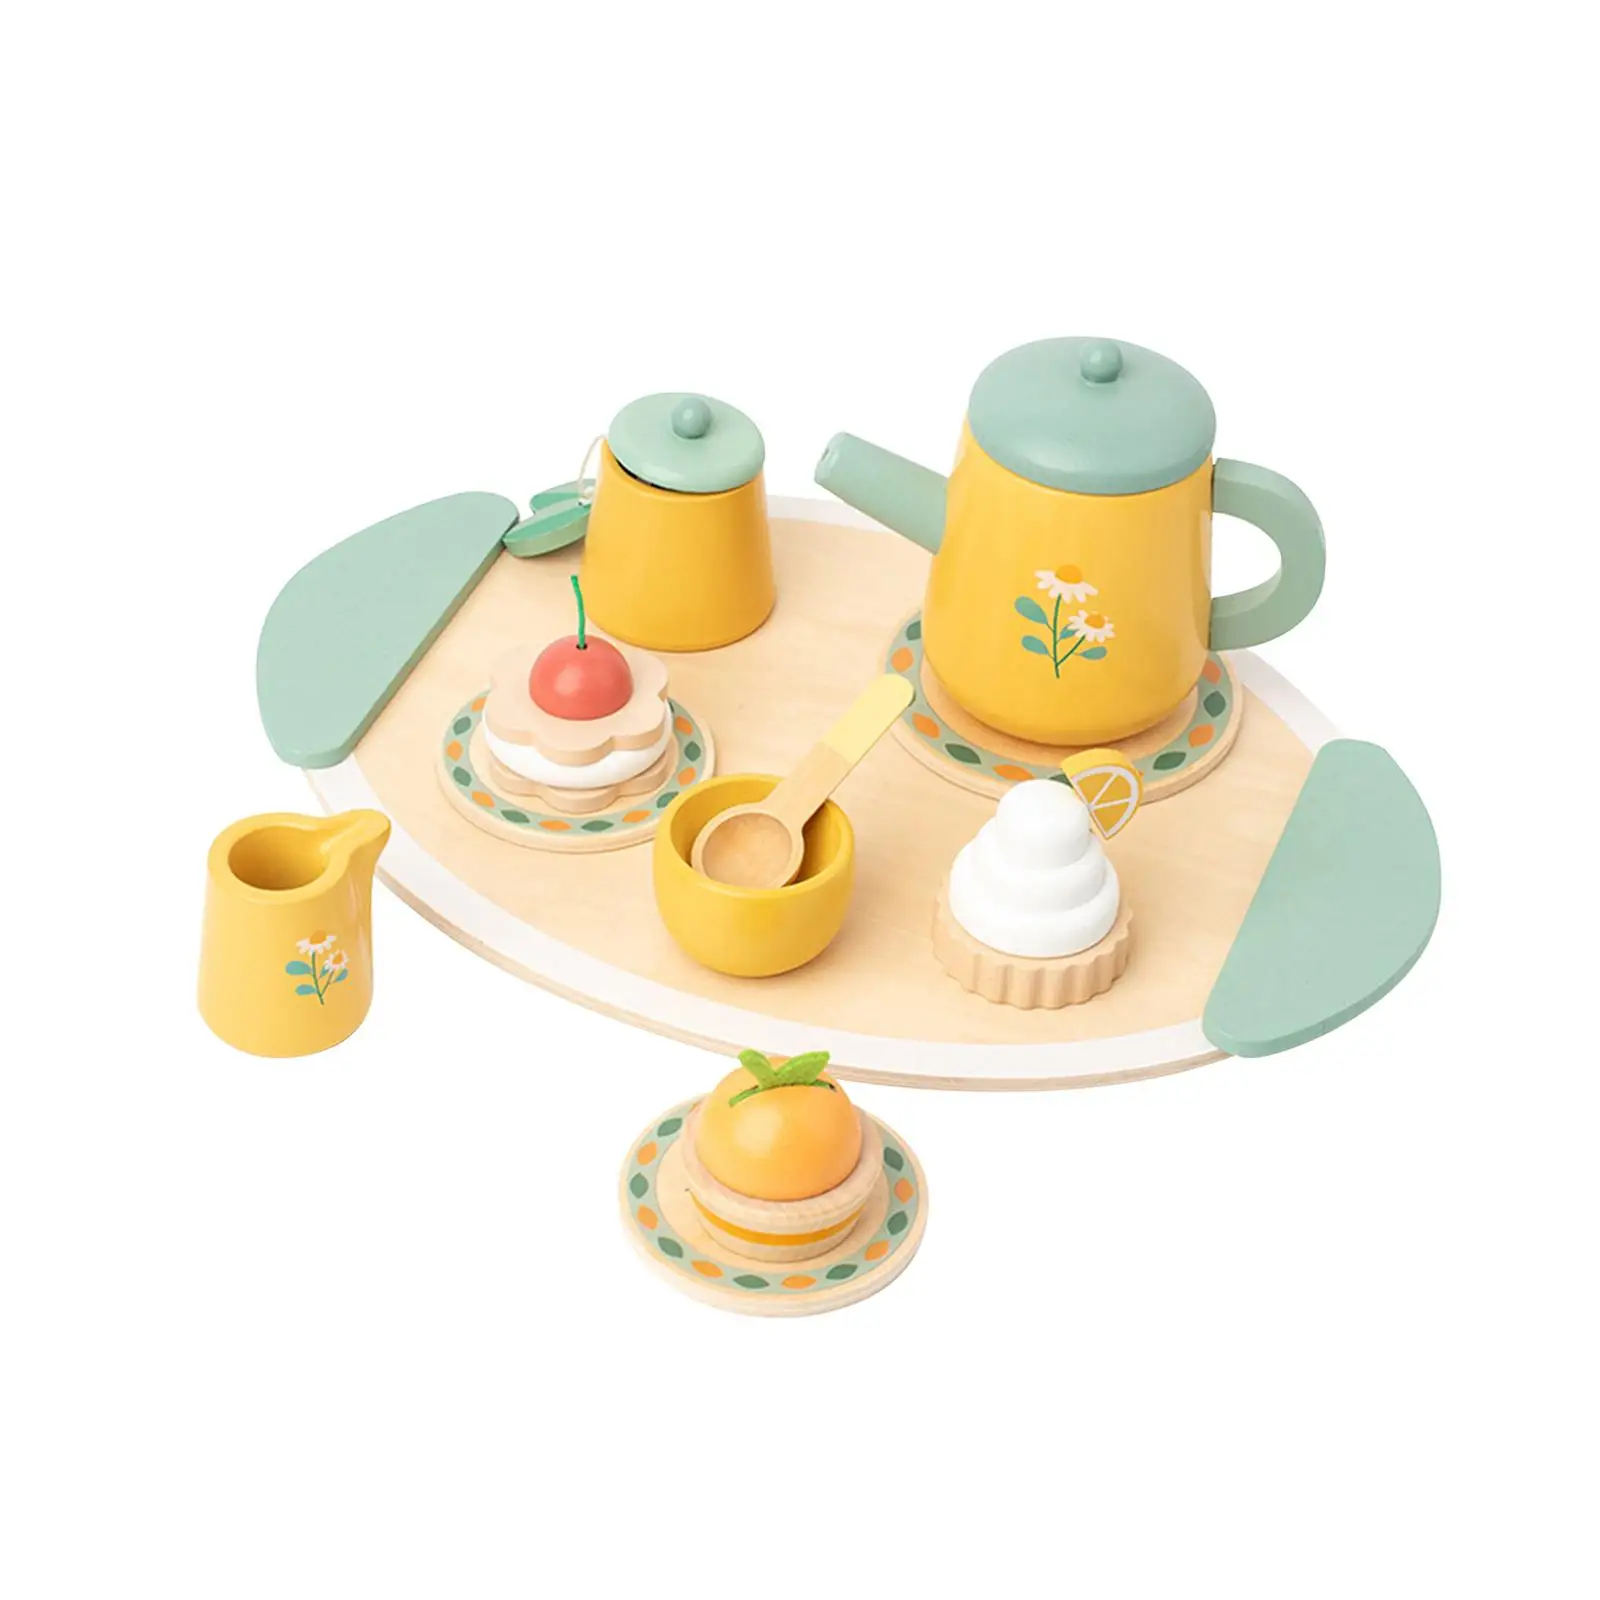 Wooden Tea Set Toys Pretend Play Cake Food Toys Afternoon Tea Set Miniature Tea Cups Set Dollhouse Decor for Girls Boys